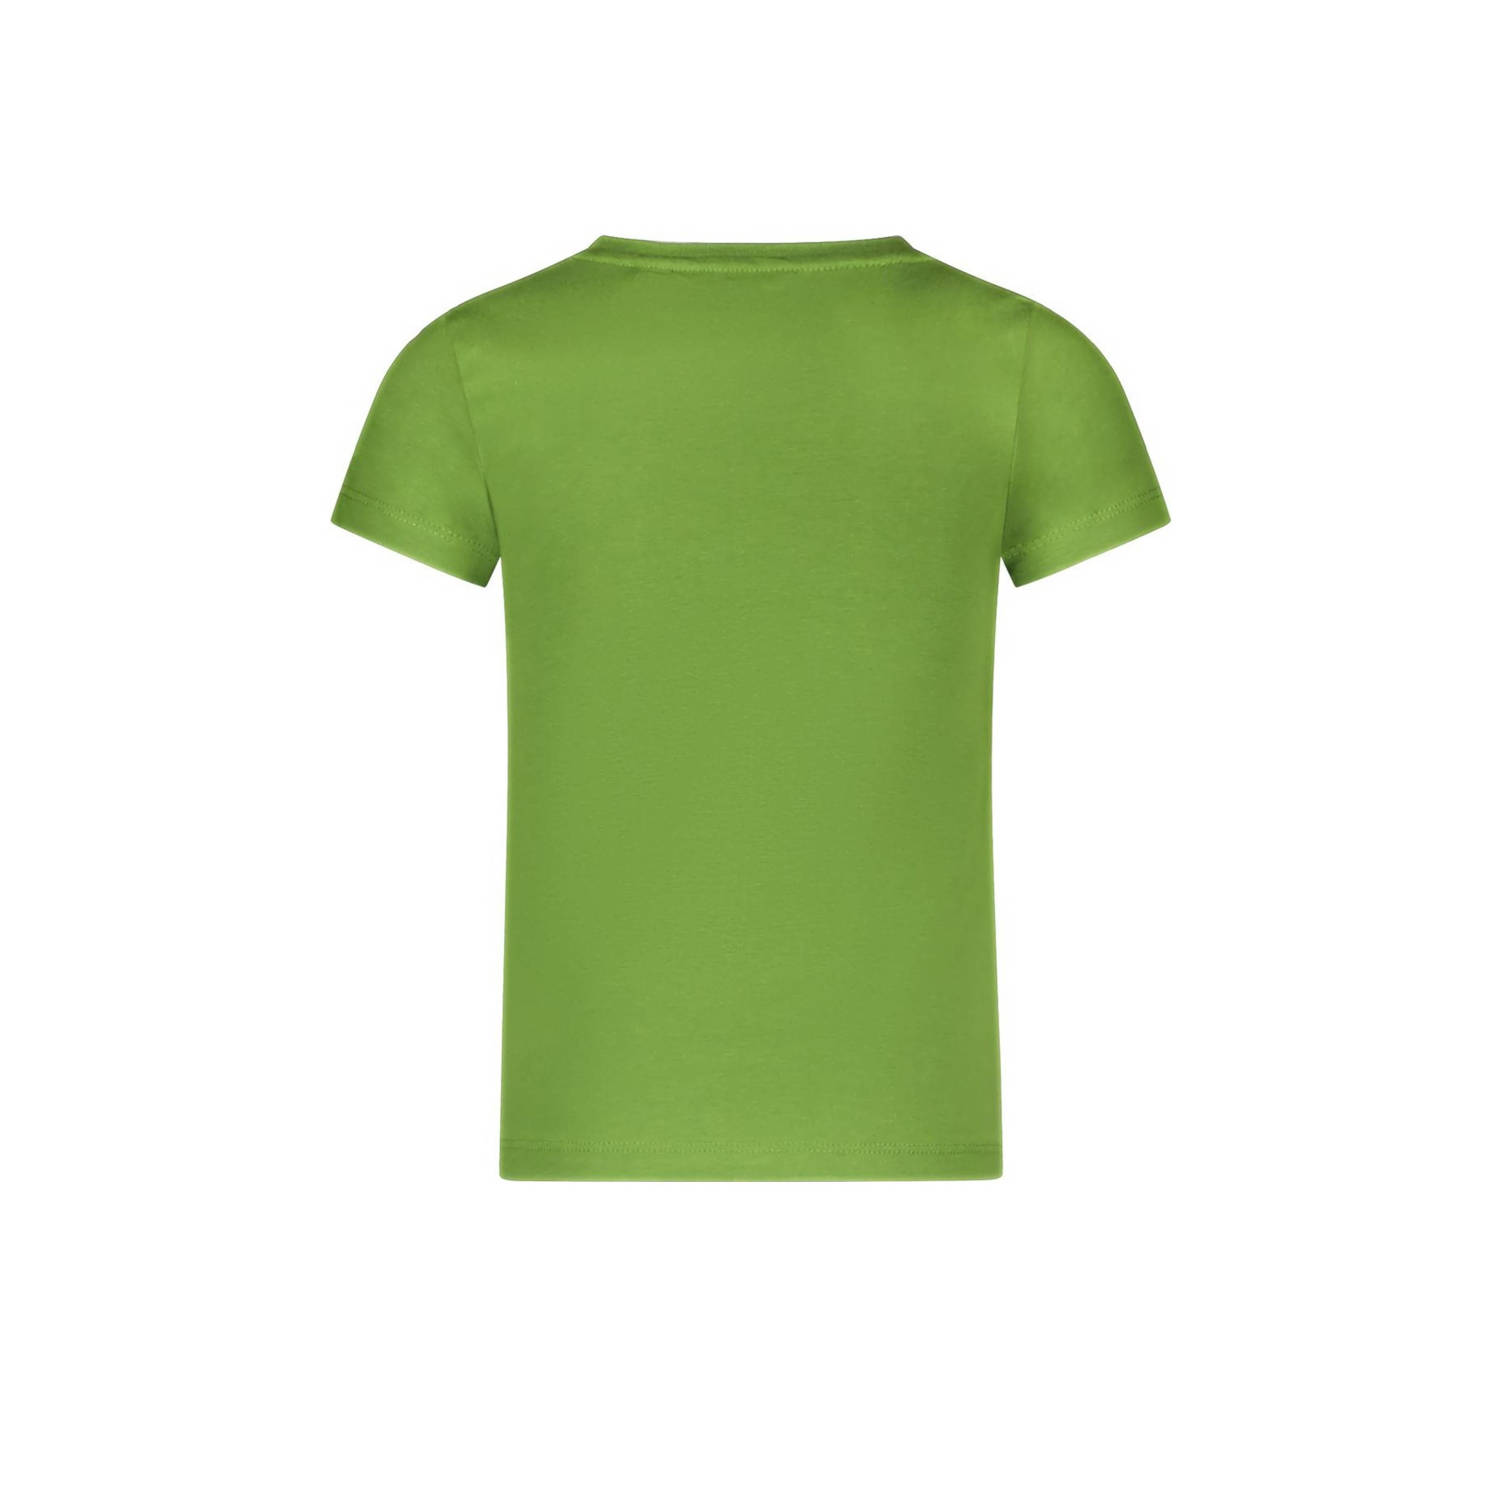 TYGO & vito T-shirt Jill met tekst en borduursels olijfgroen